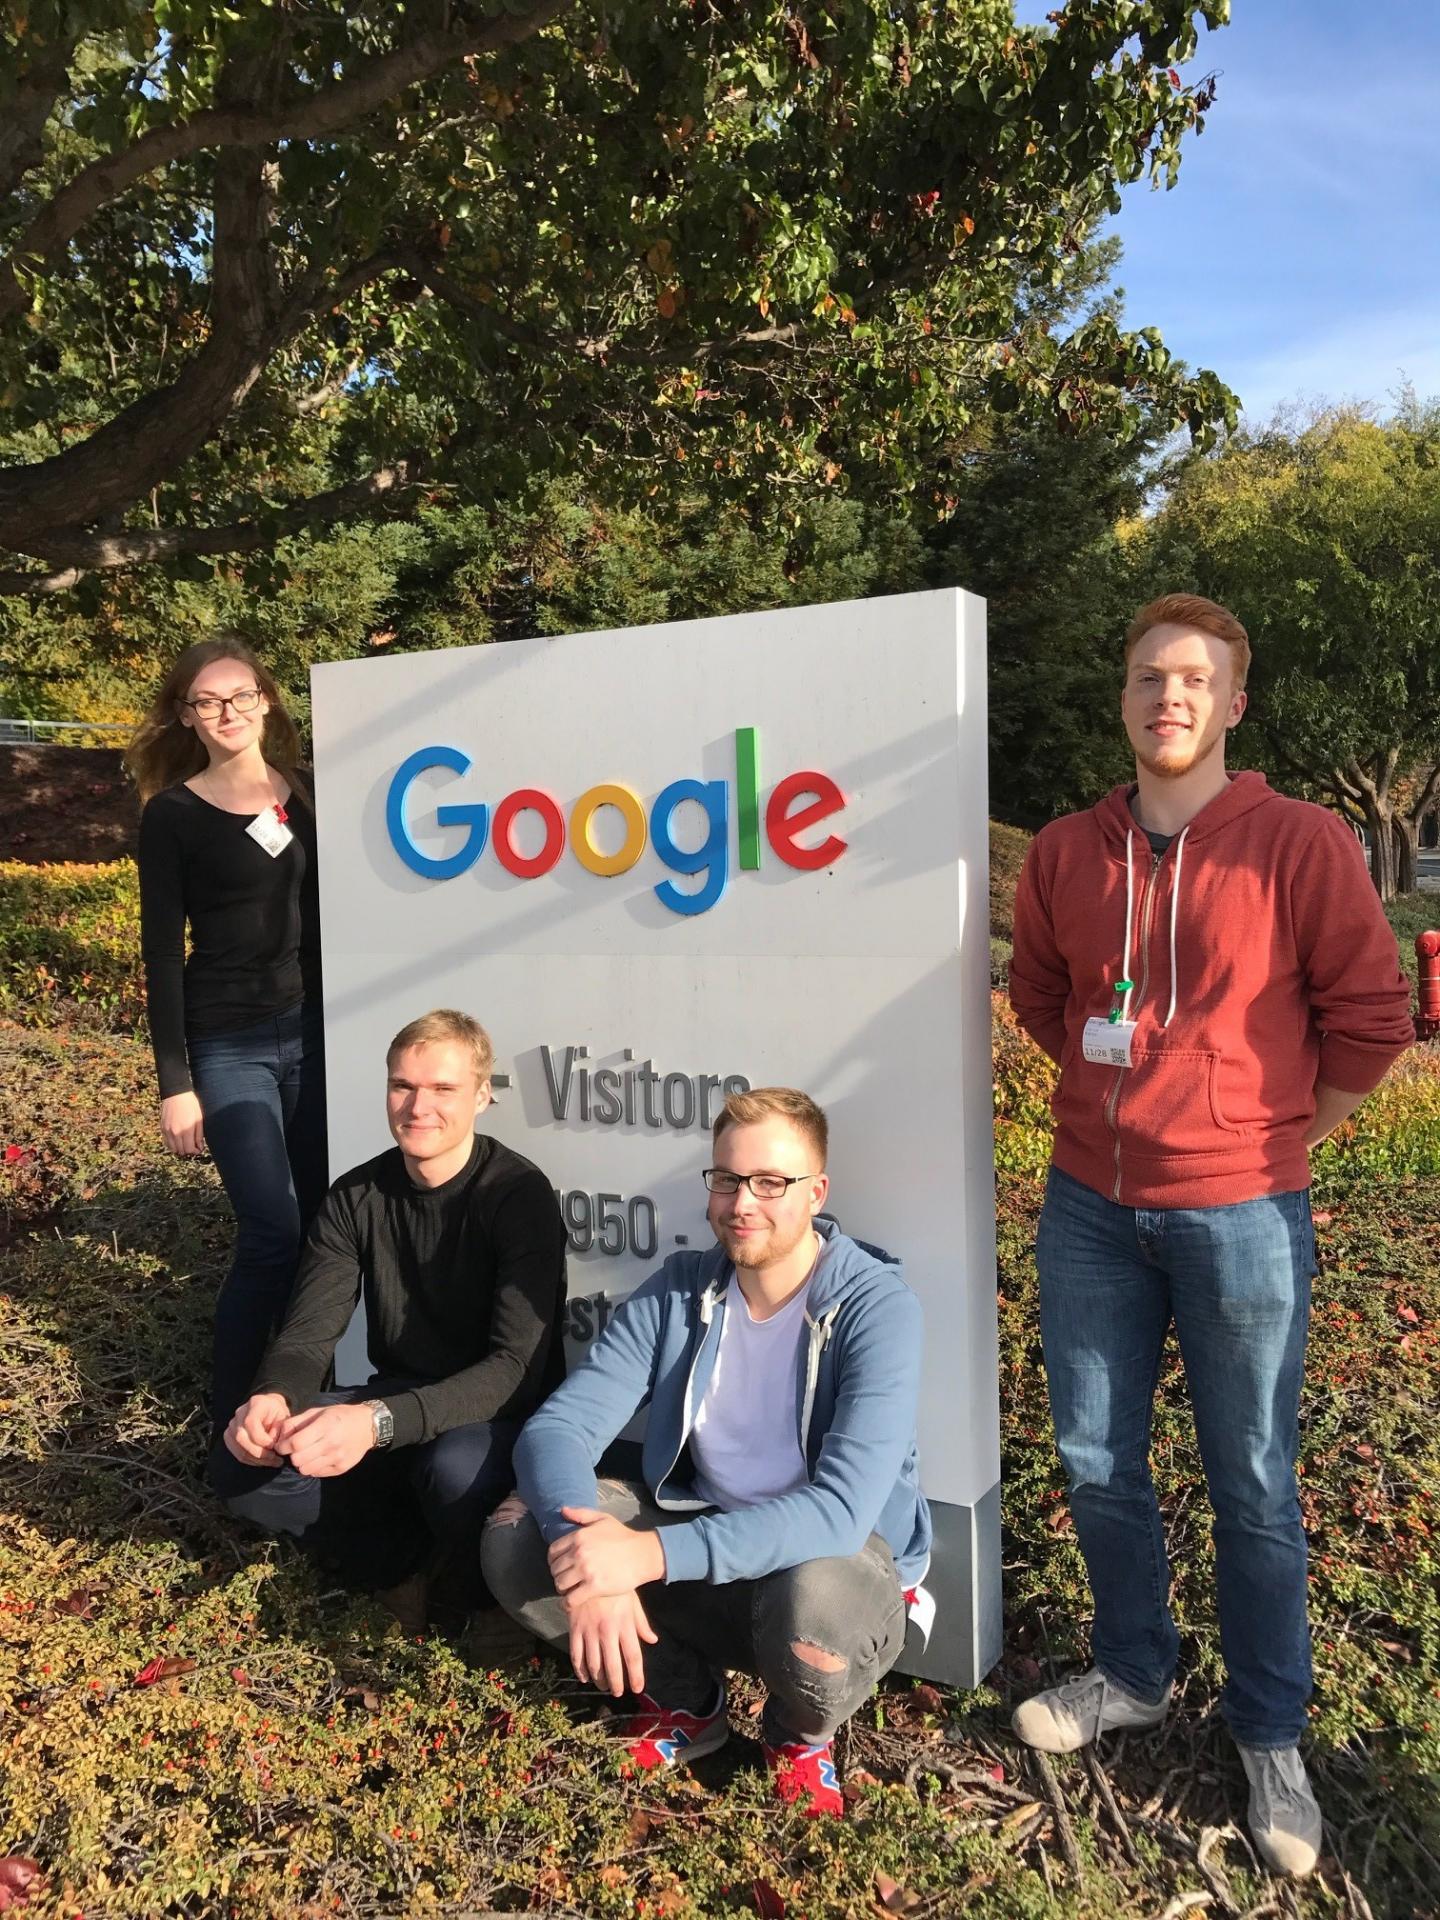 KTU Team NanoLens in the Silicon Valley